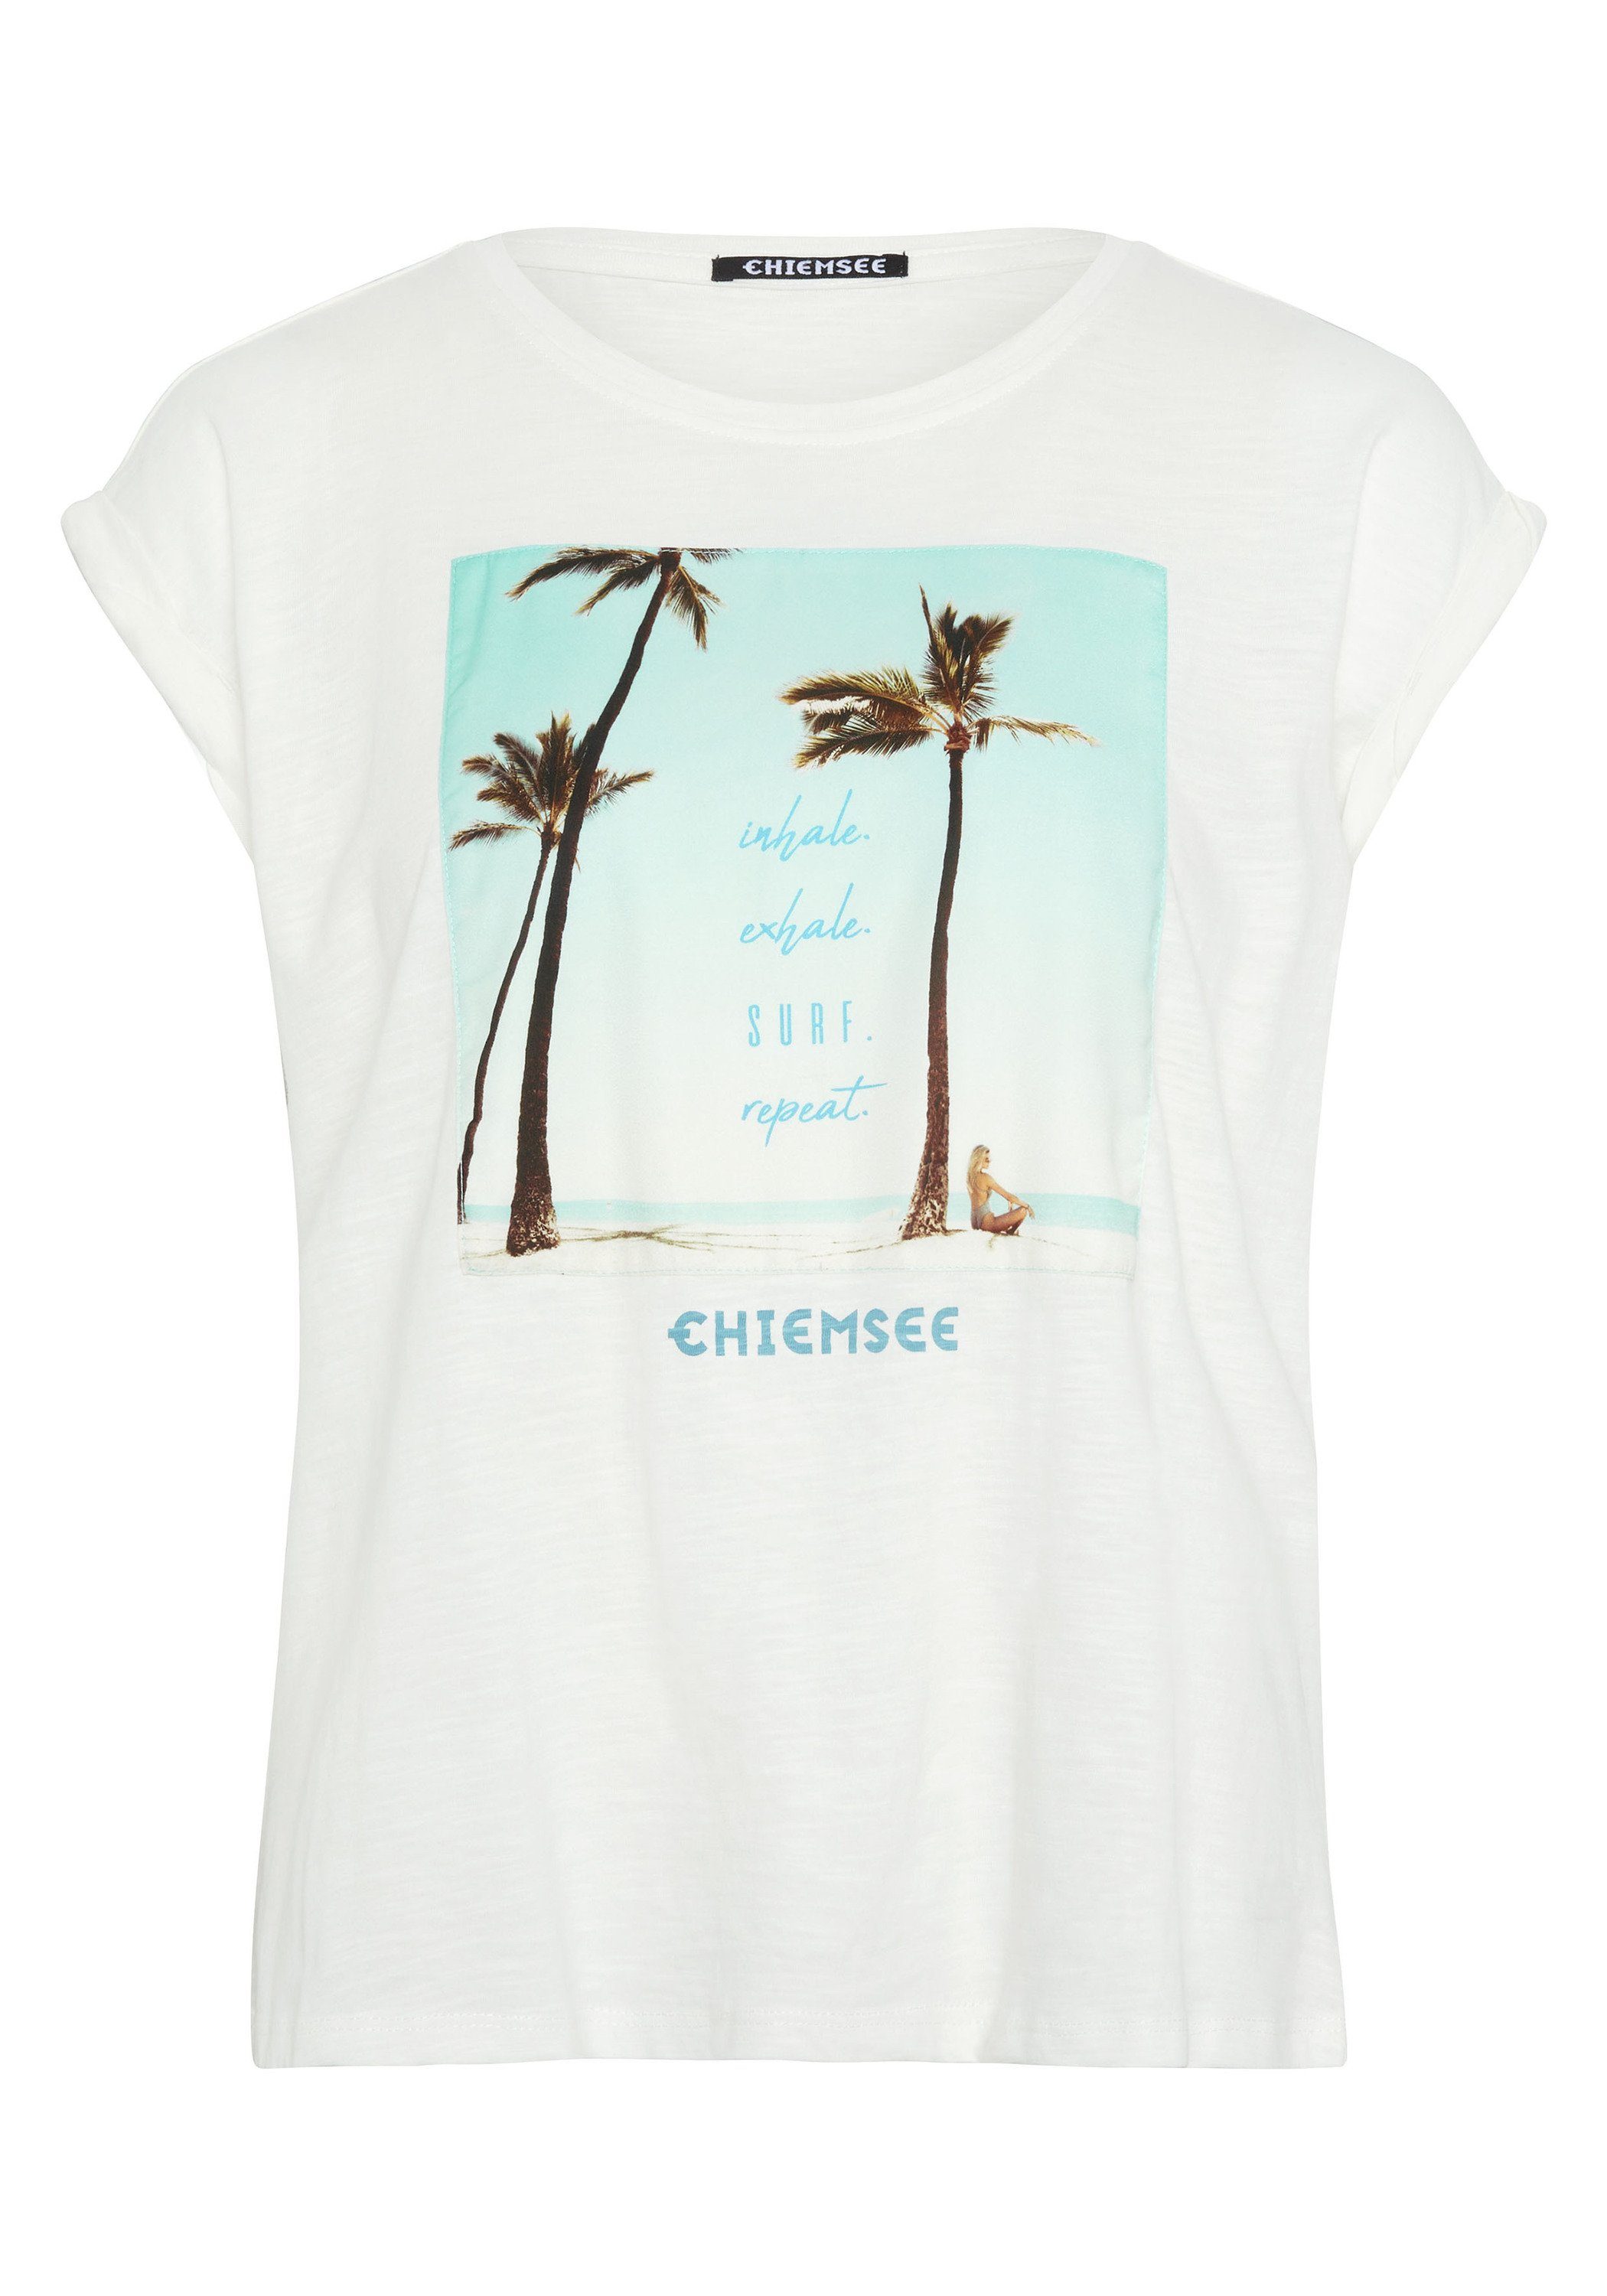 Chiemsee Print-Shirt T-Shirt 1 White Star Fotoprint 11-4202 mit